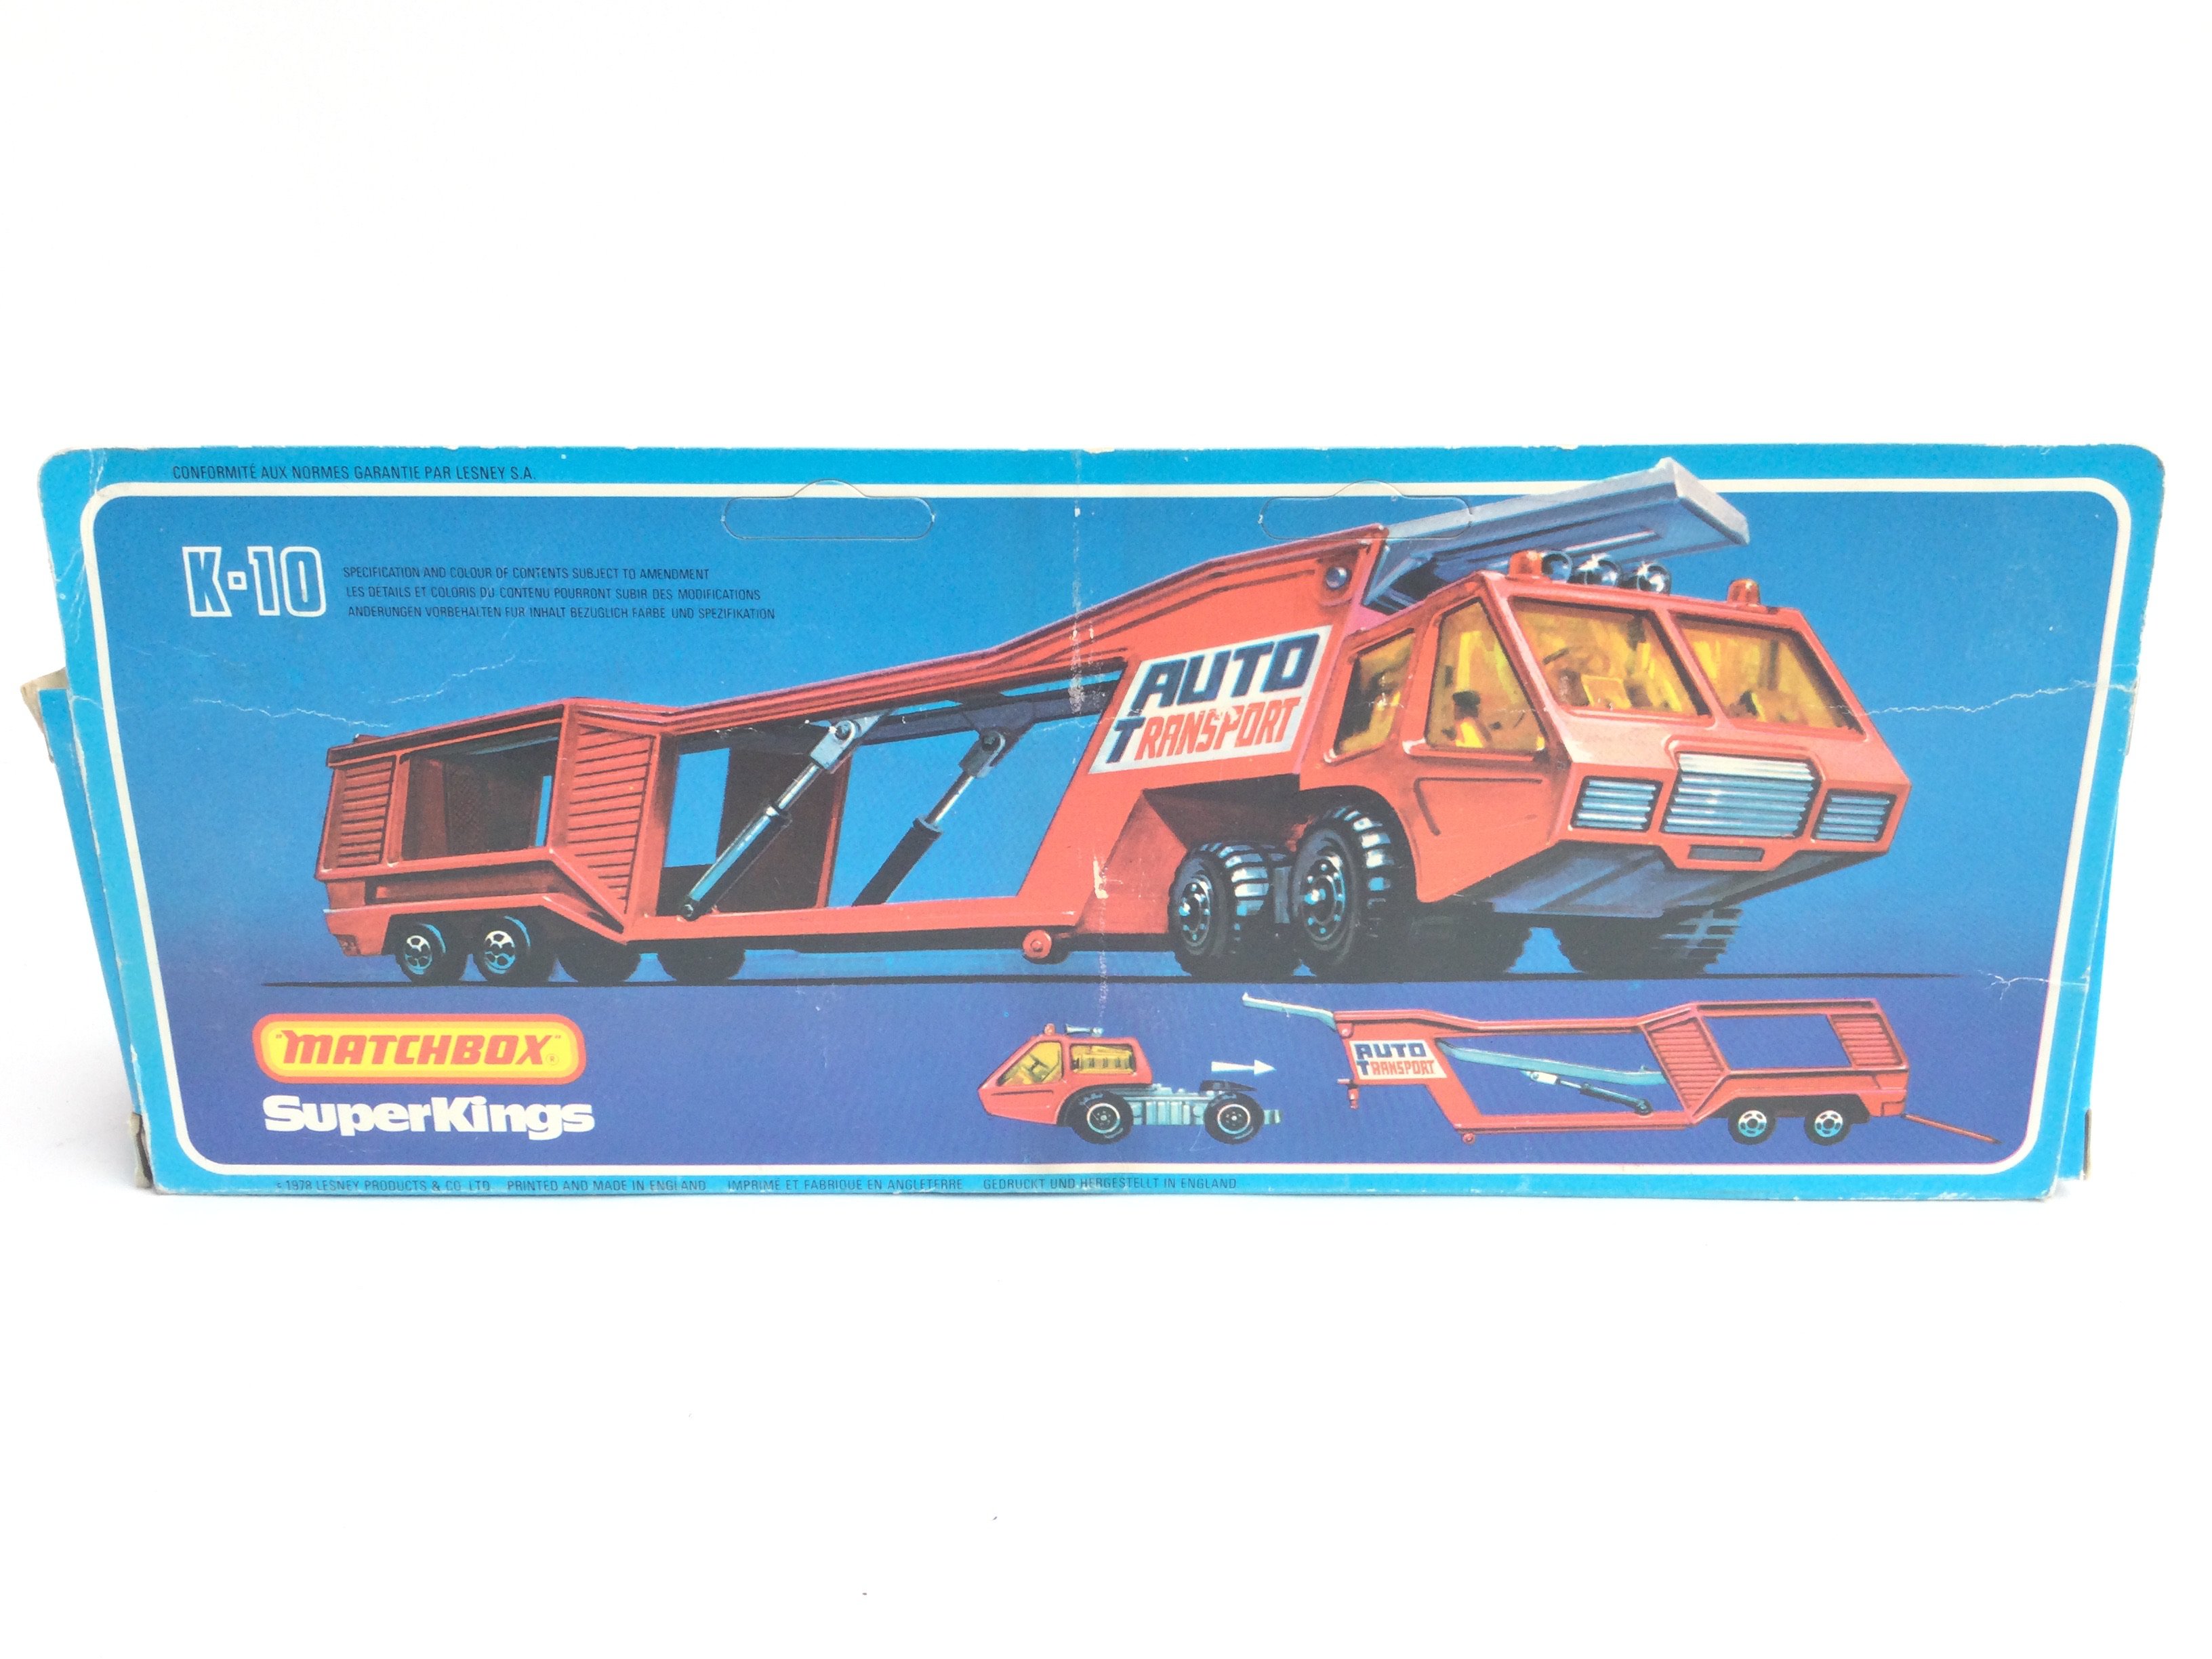 A Boxed Matchbox Car Transporter # K-10. - Image 2 of 2